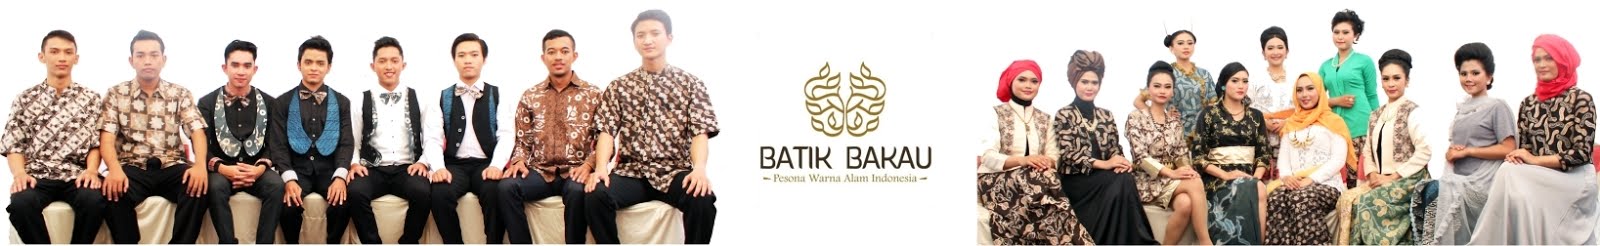 Blog Batik Bakau | Pesona Warna Alam Indonesia